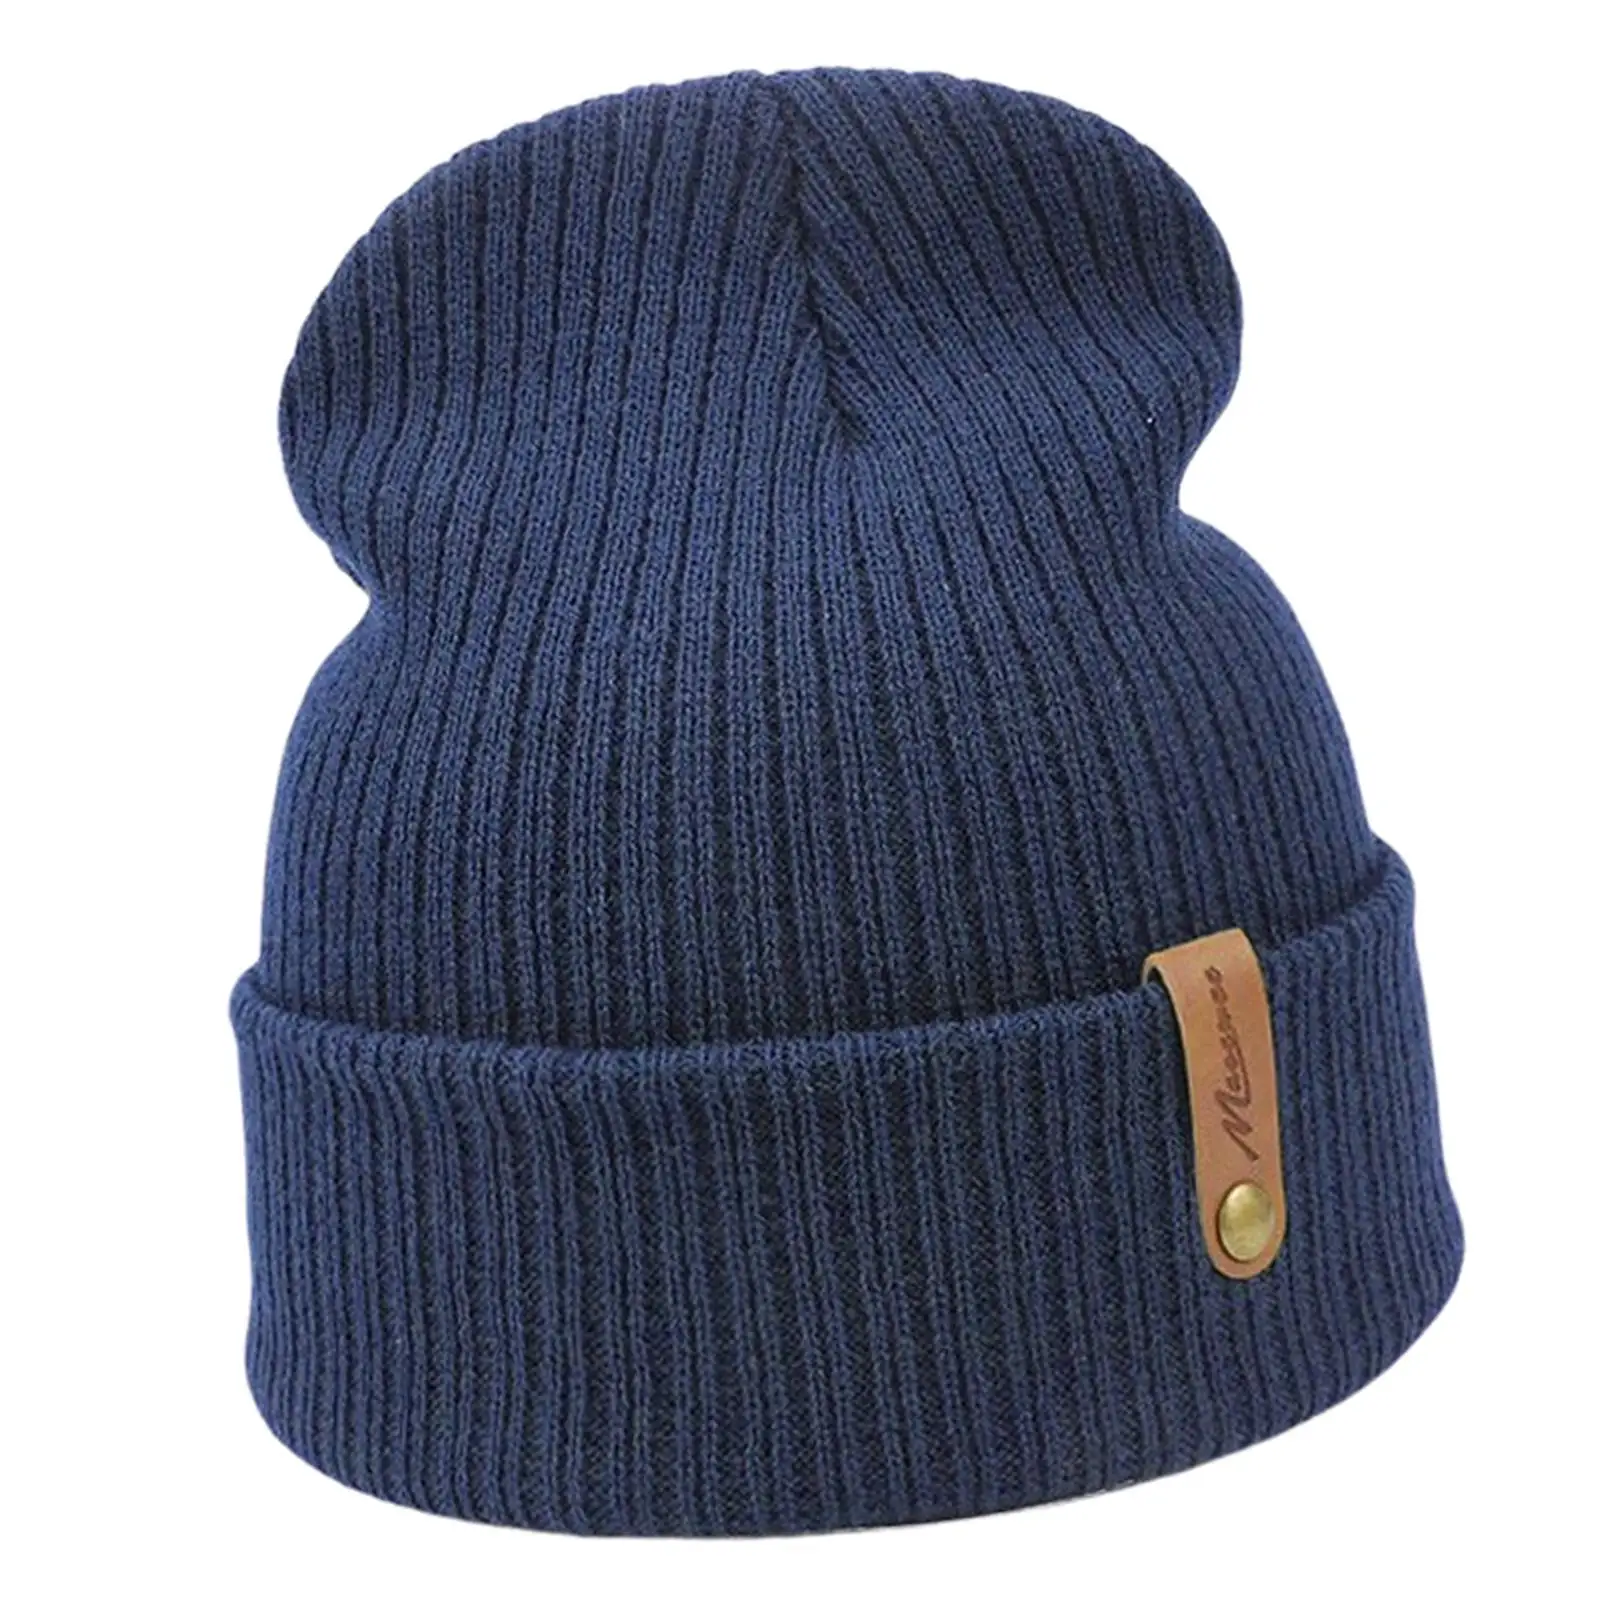 Soft Winter Beanie Warm Knit Hat Slouchy Baggy Beanie Unisex for Cycling Ski